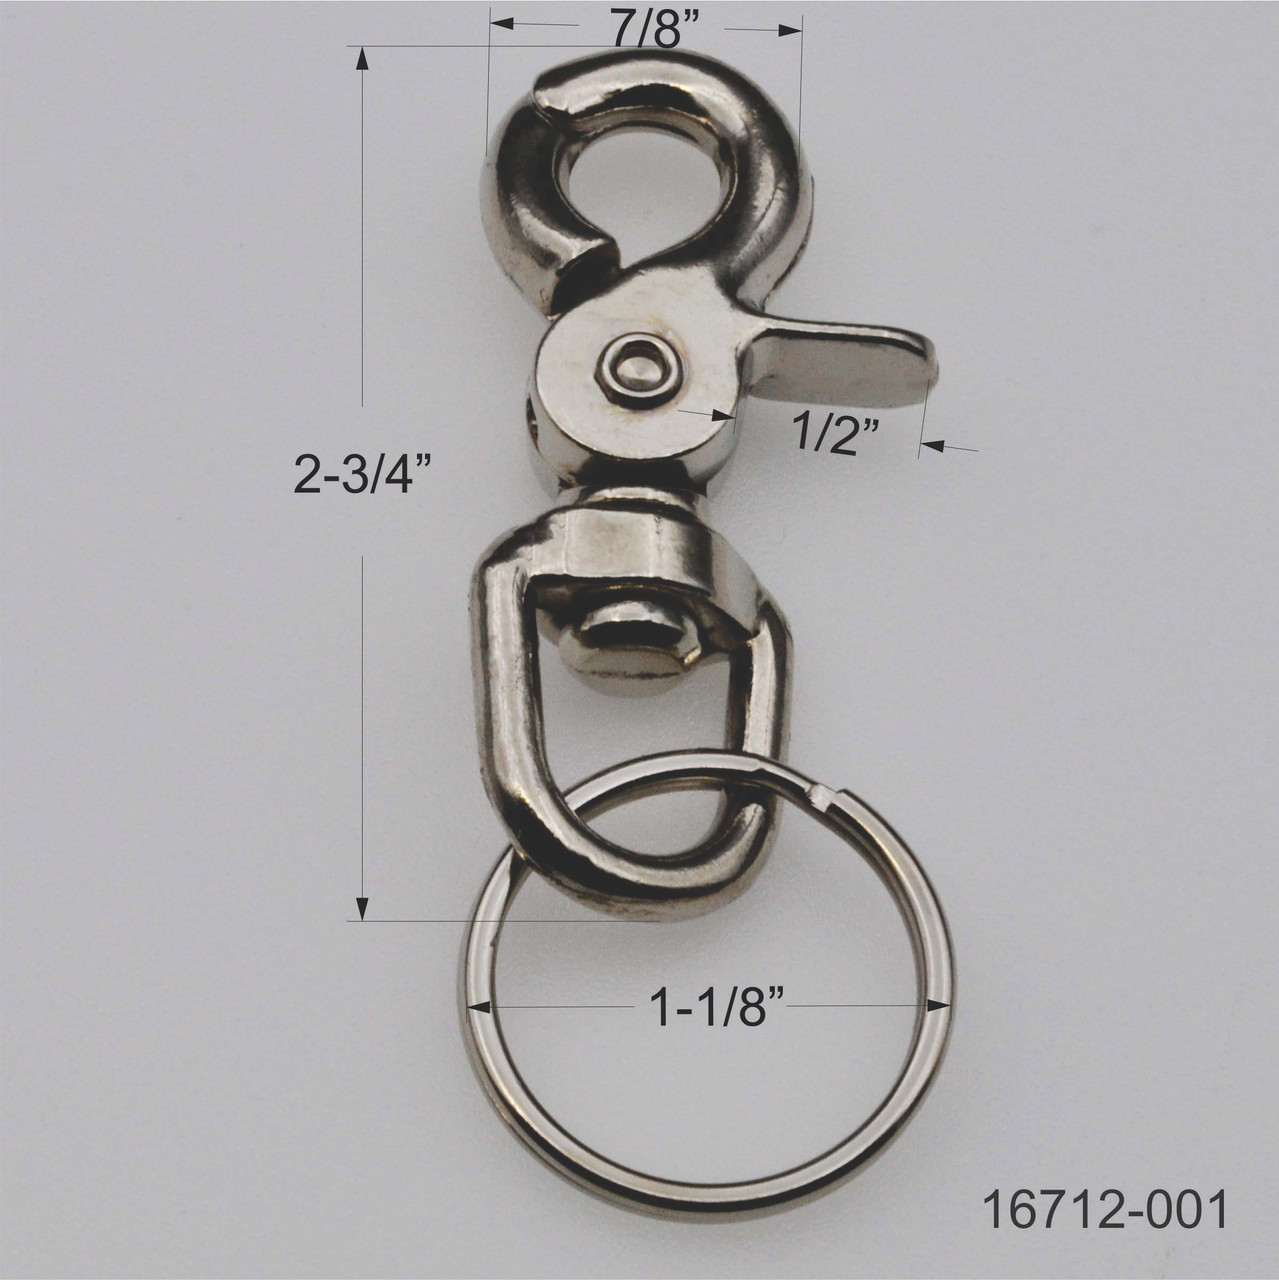 Heavy Duty Trigger Snap Clip Key Ring Nickel Plated